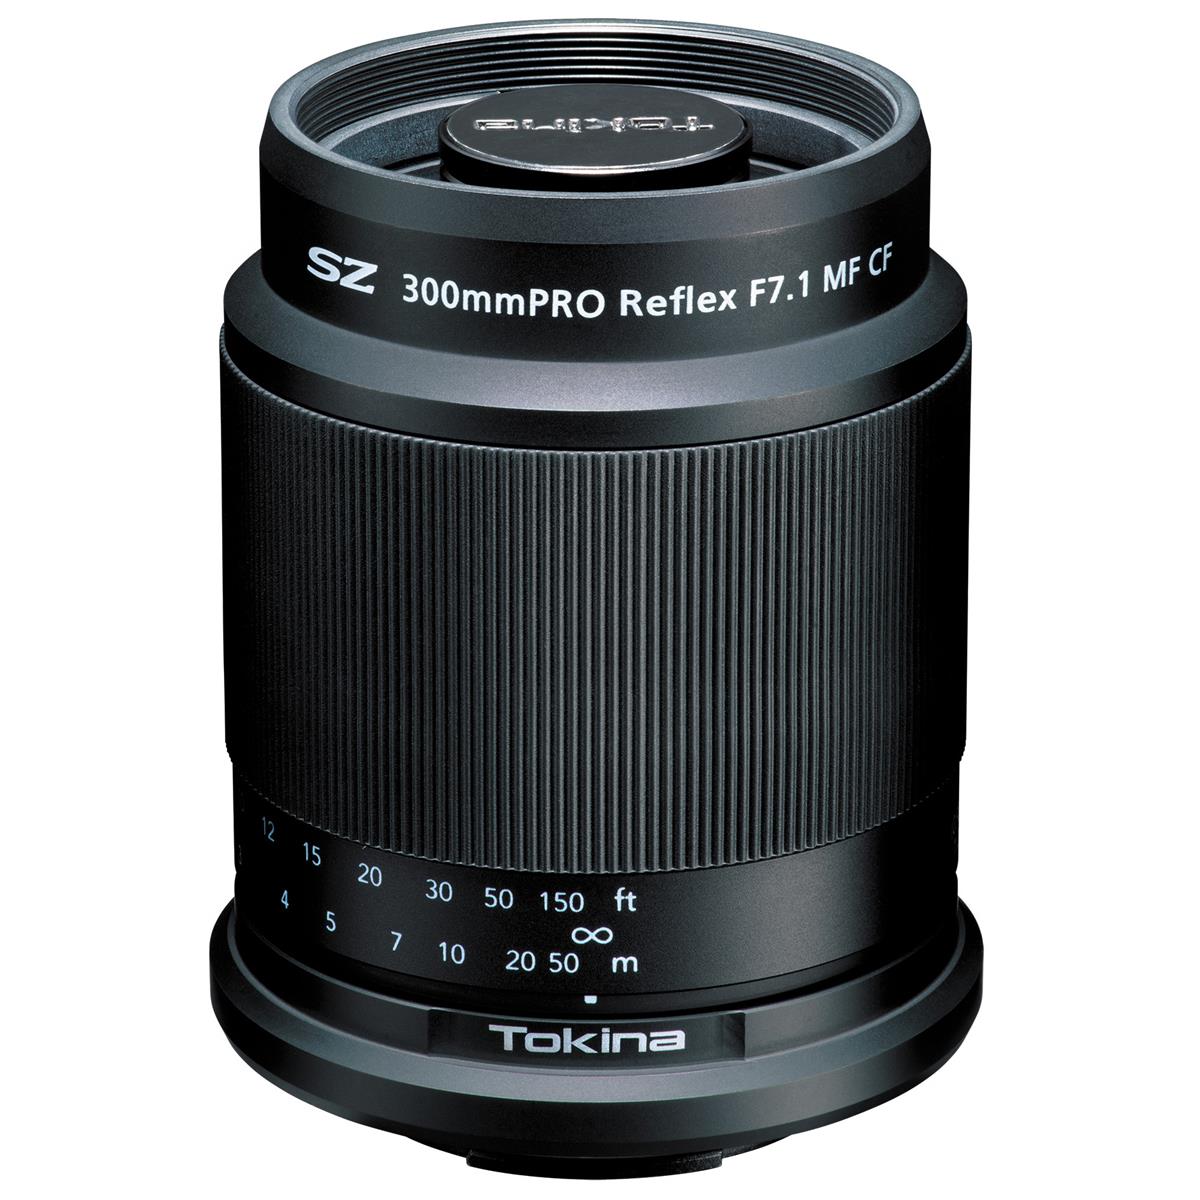 Image of Tokina SZ PRO 300mm f/7.1 Reflex MF CF Lens for Canon EF-M